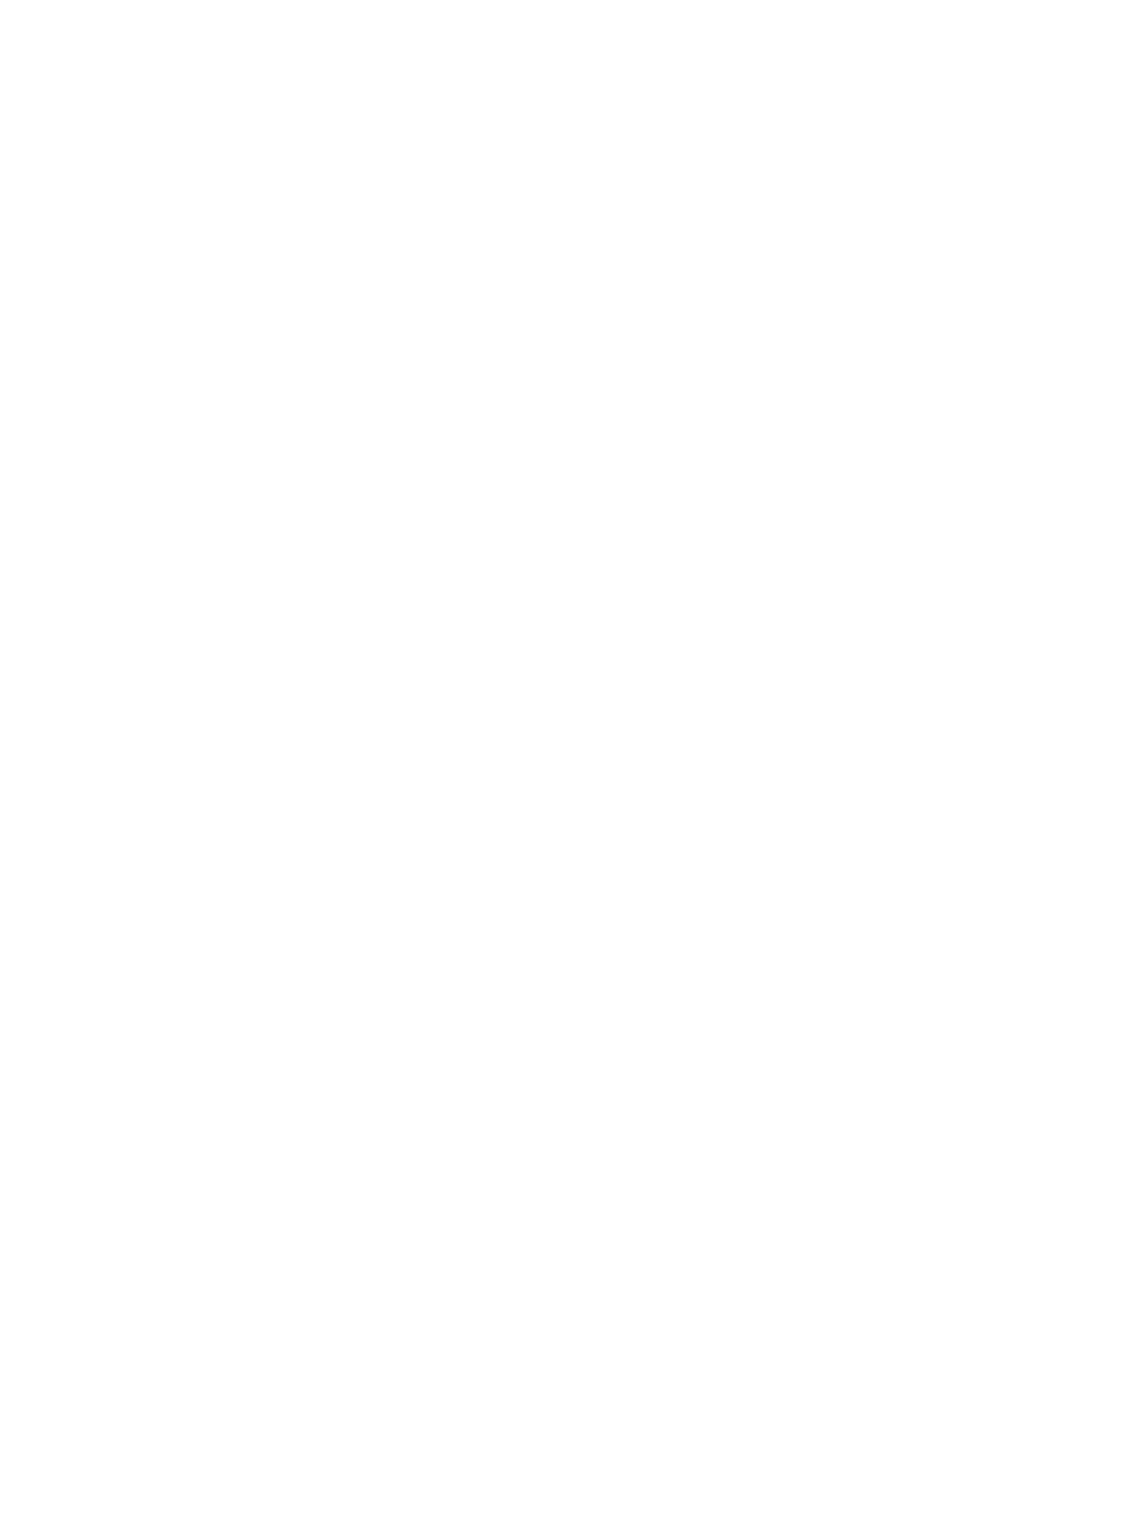 PTT Oil and Retail Business logo pour fonds sombres (PNG transparent)